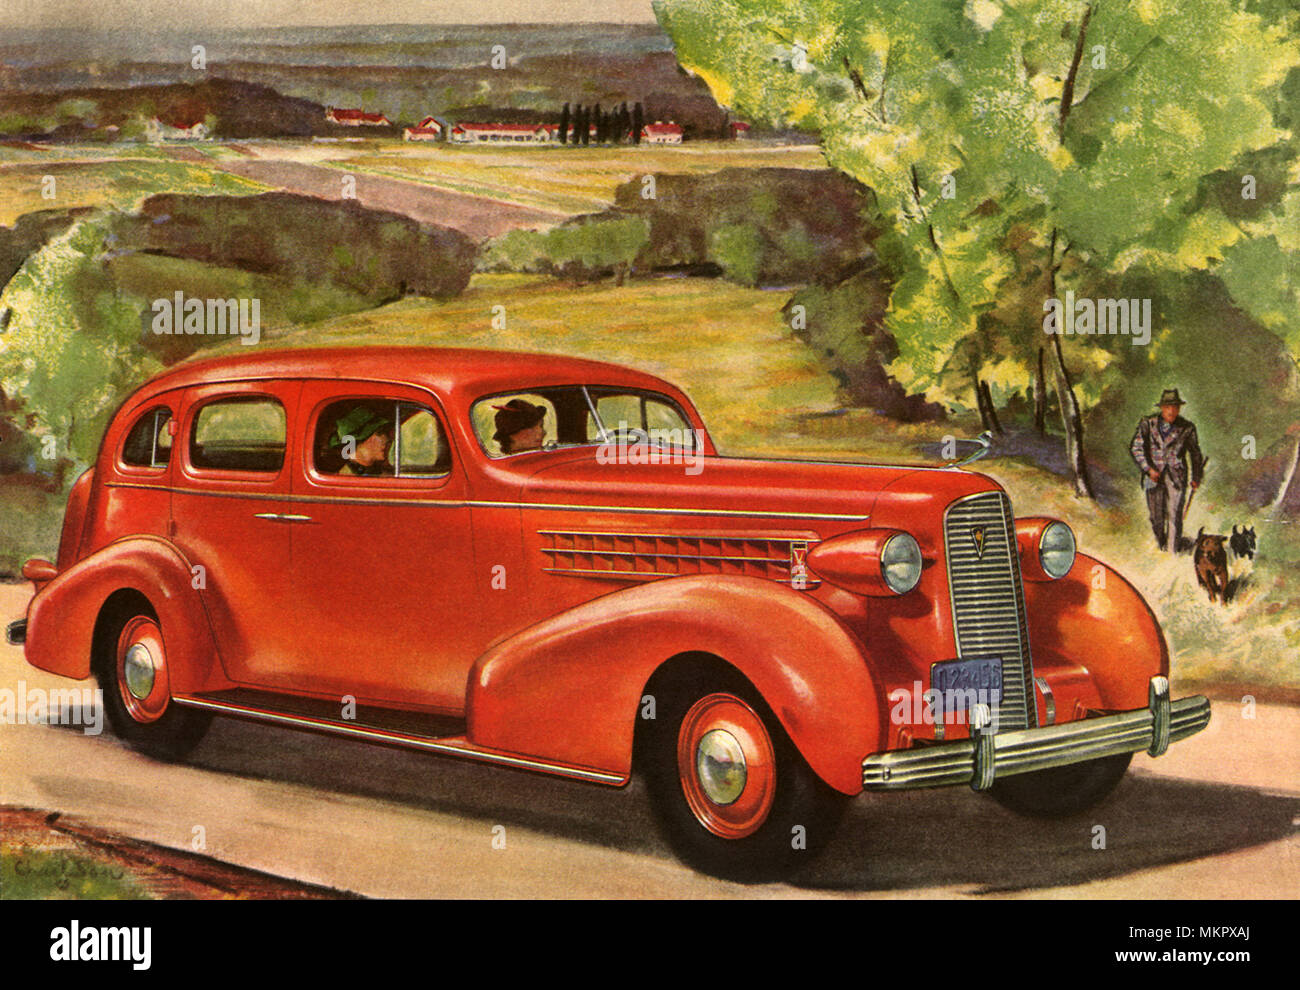 1936 Cadillac Touring Sedan Serie 60 Foto de stock